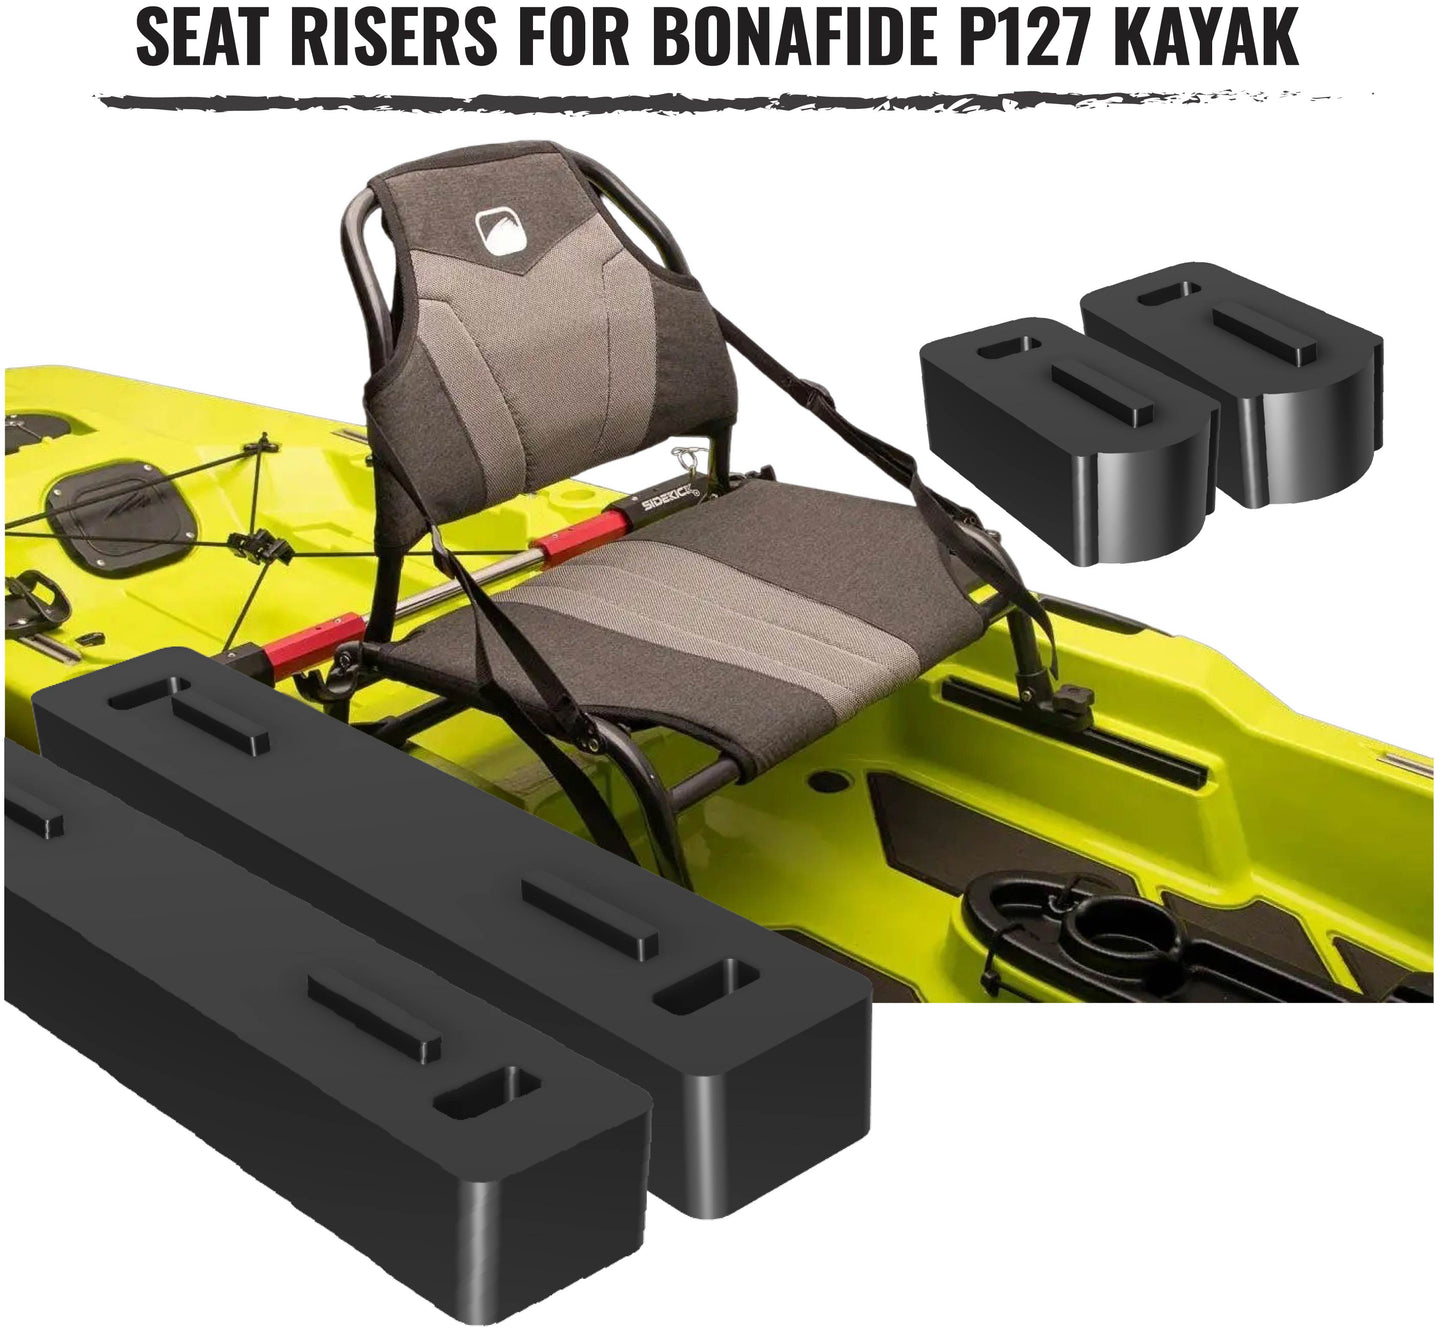 Bonafide P127 Kayak Seat Risers - Raised Height for Increased Comfort and Performance